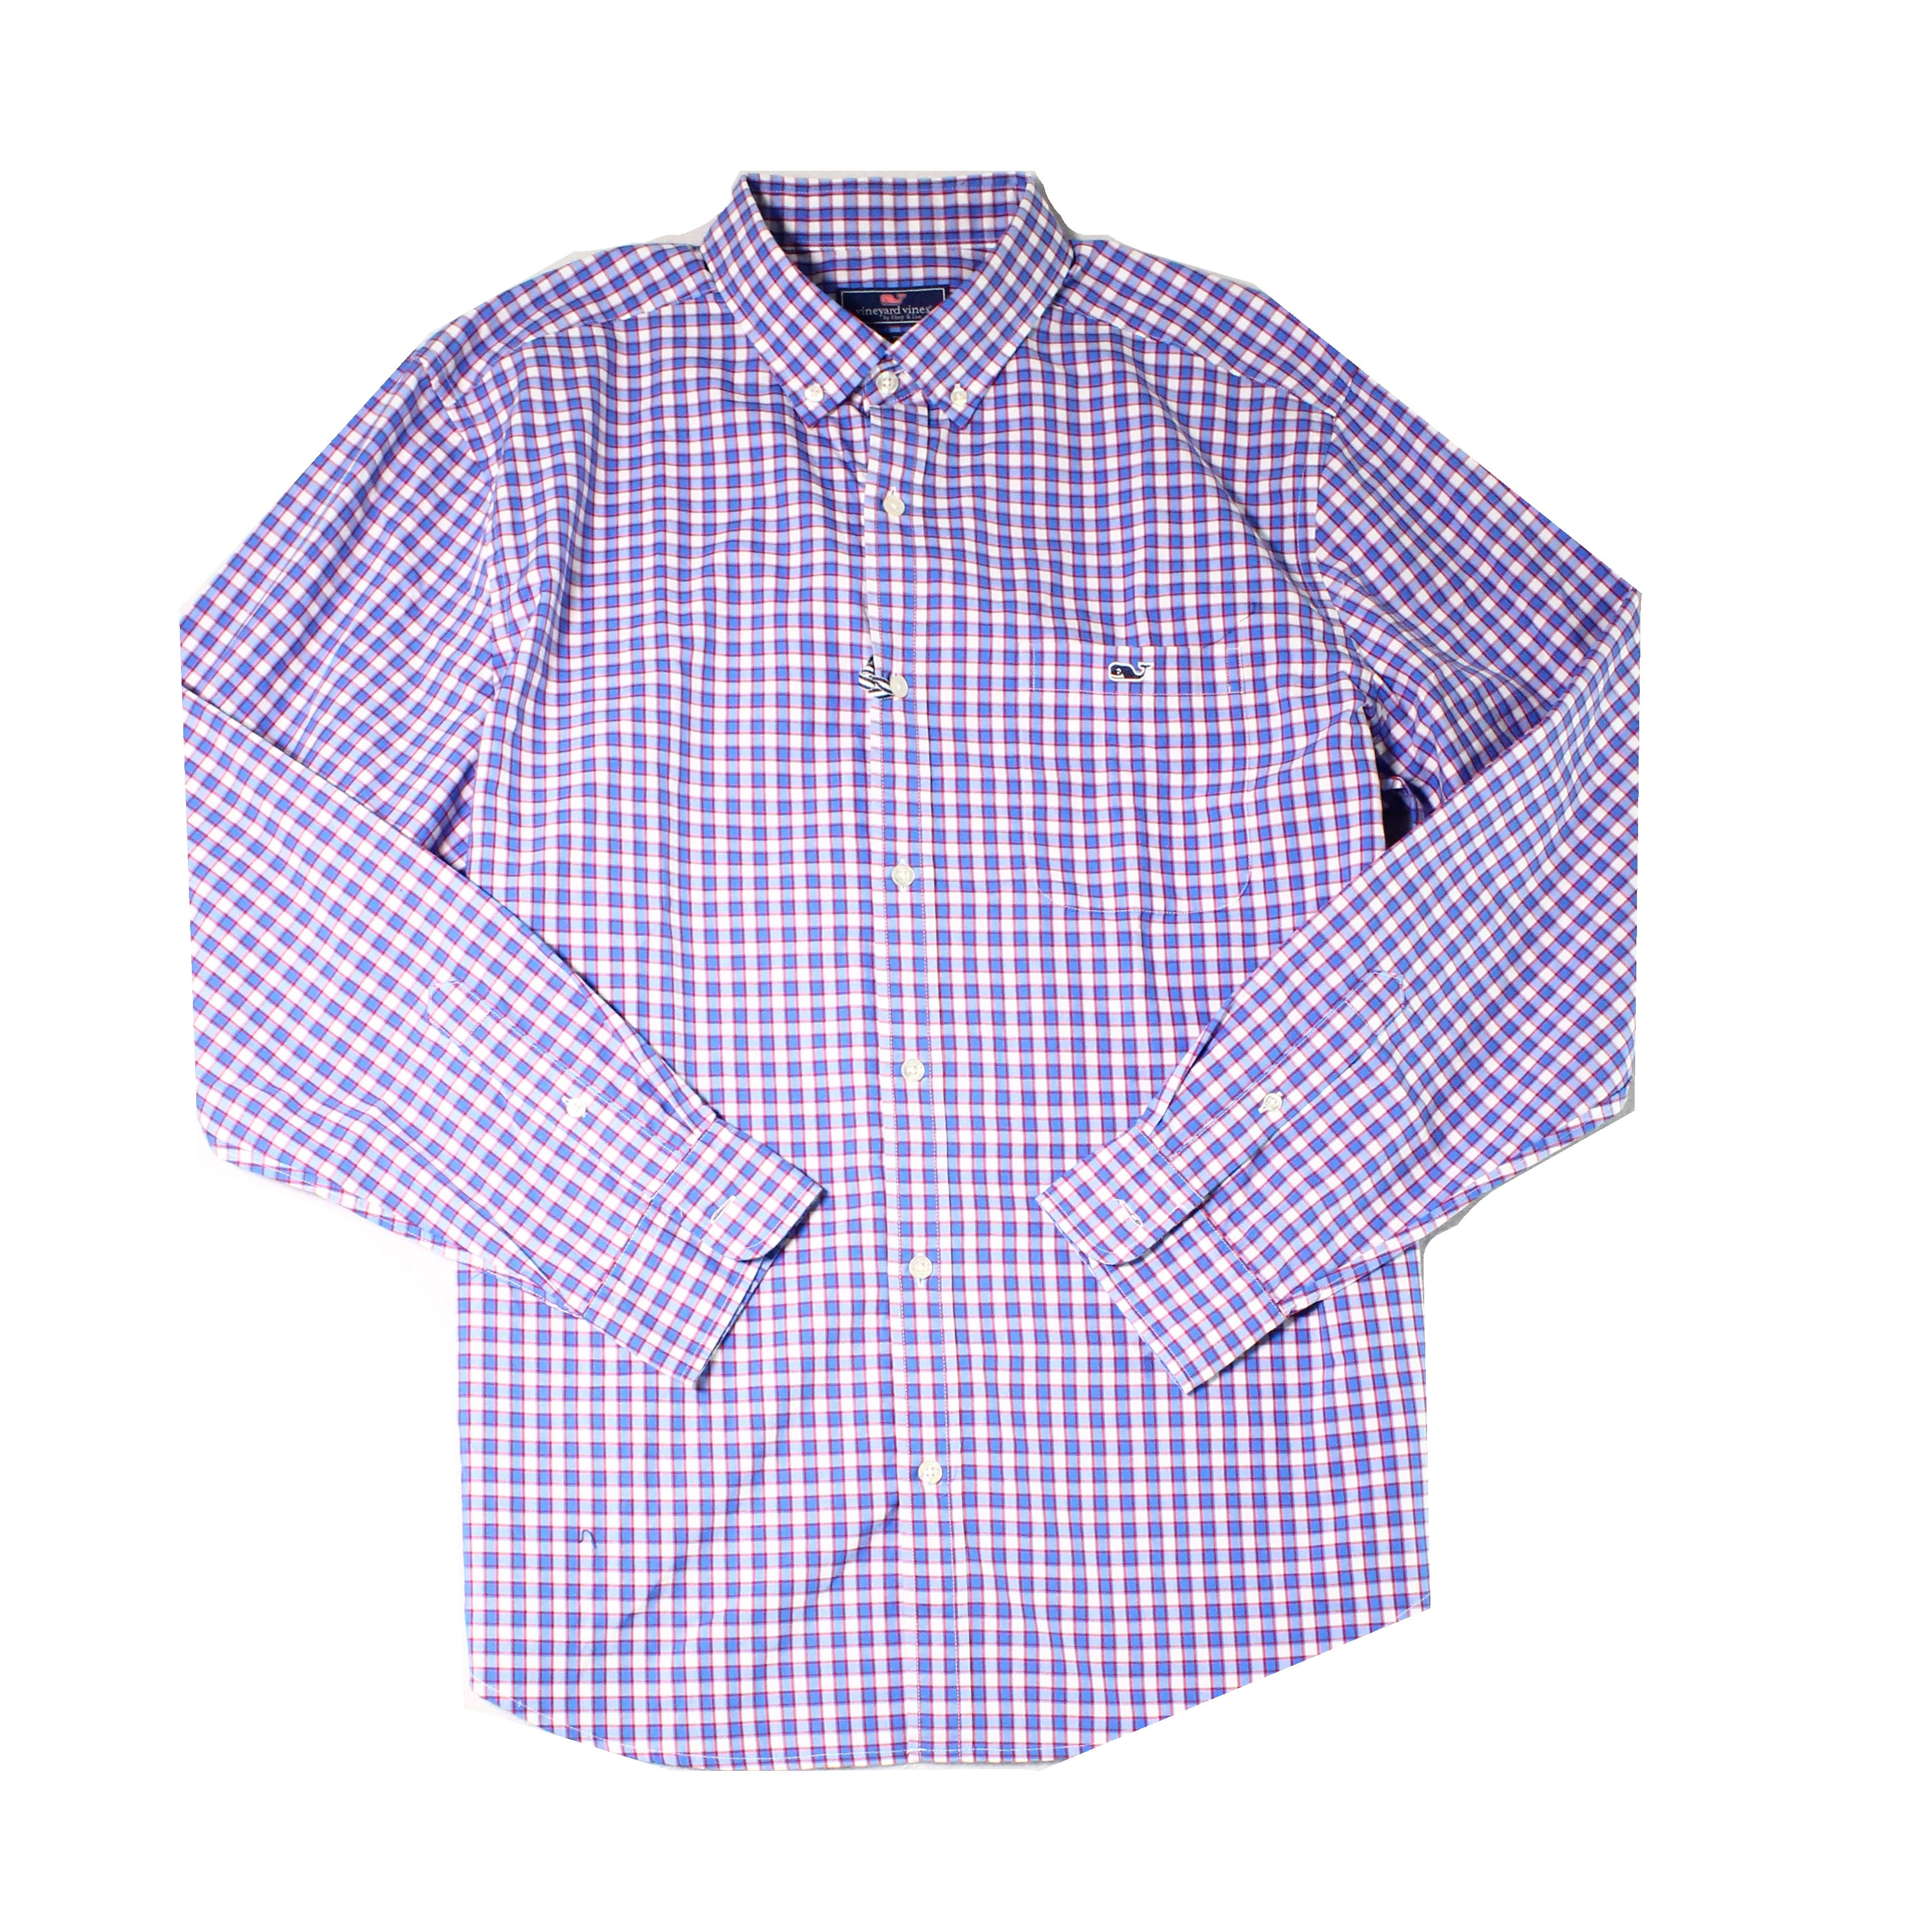 Vineyard Vines Casual Shirts - Vinetard Vines Mens Shirt Pocket Button ...